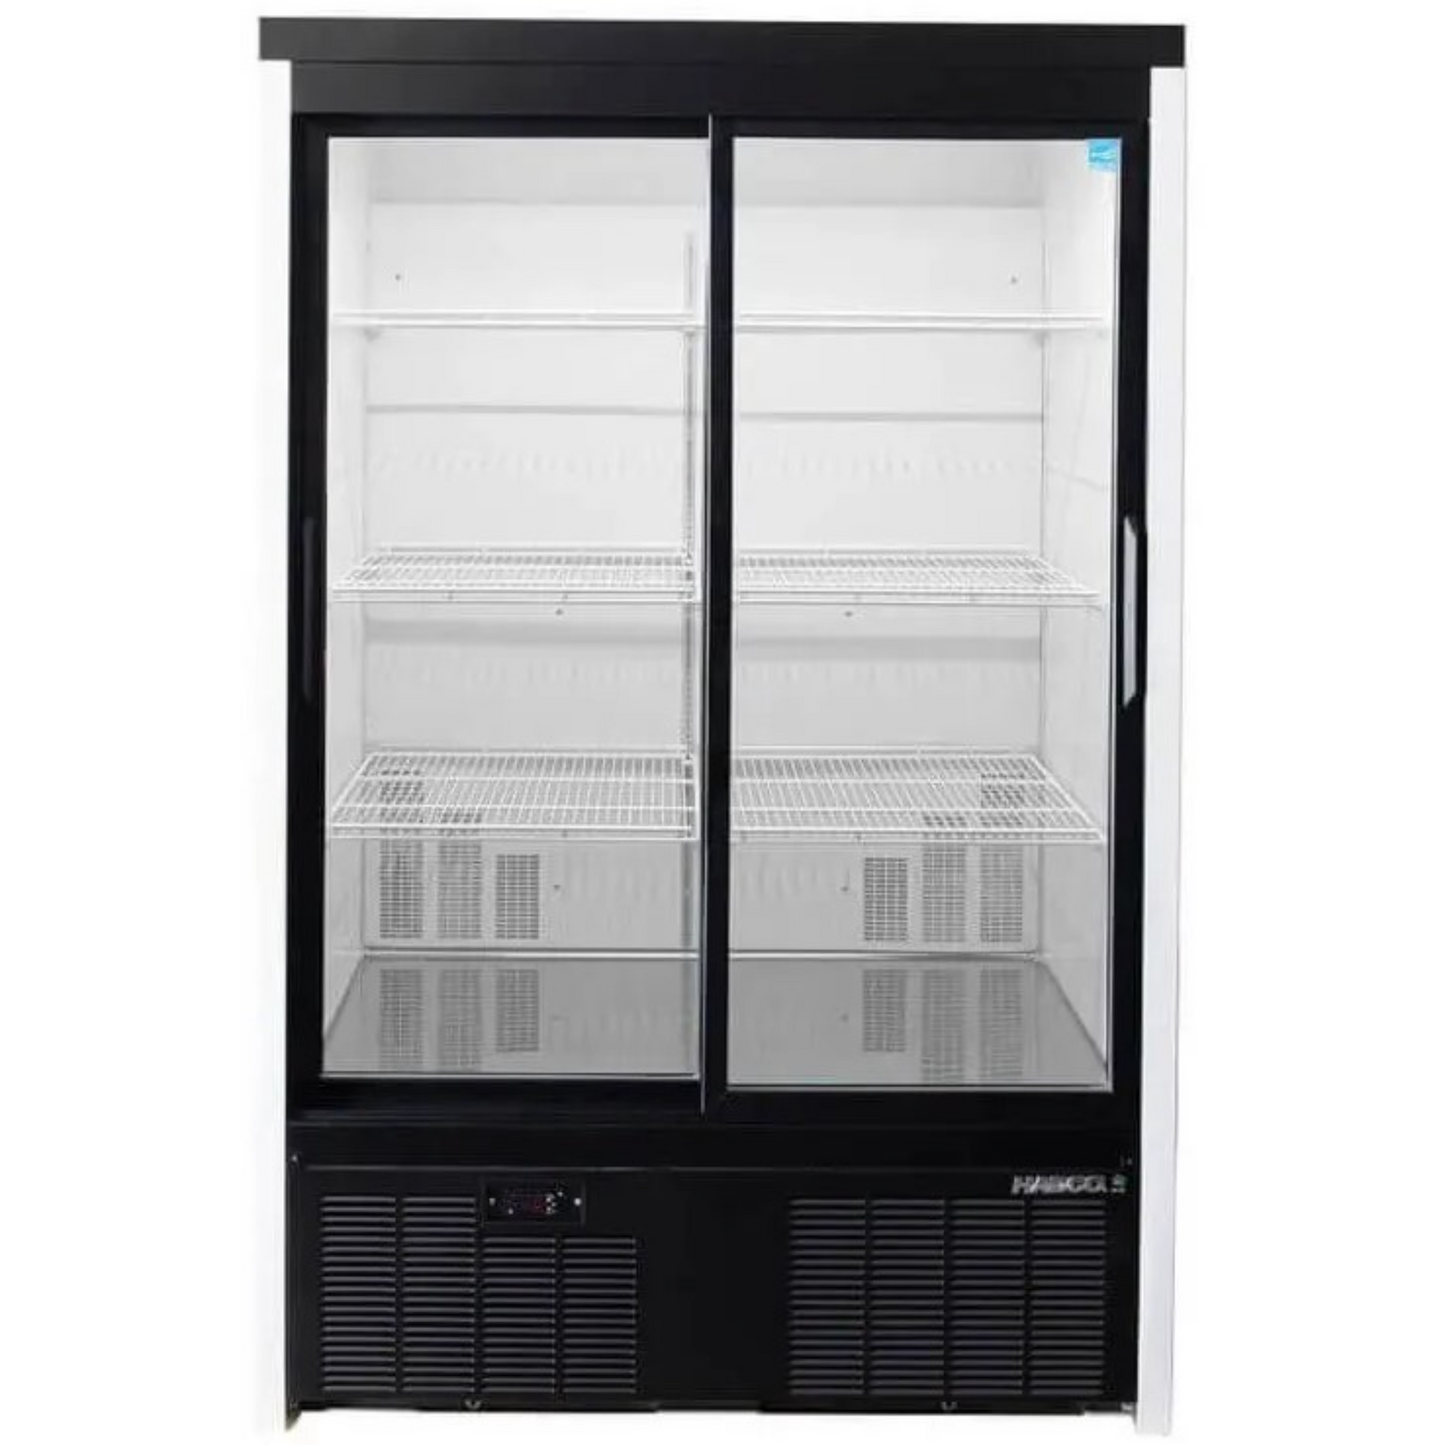 HABCO SE40eHC 47.5" Double Sliding Glass Door Refrigerator